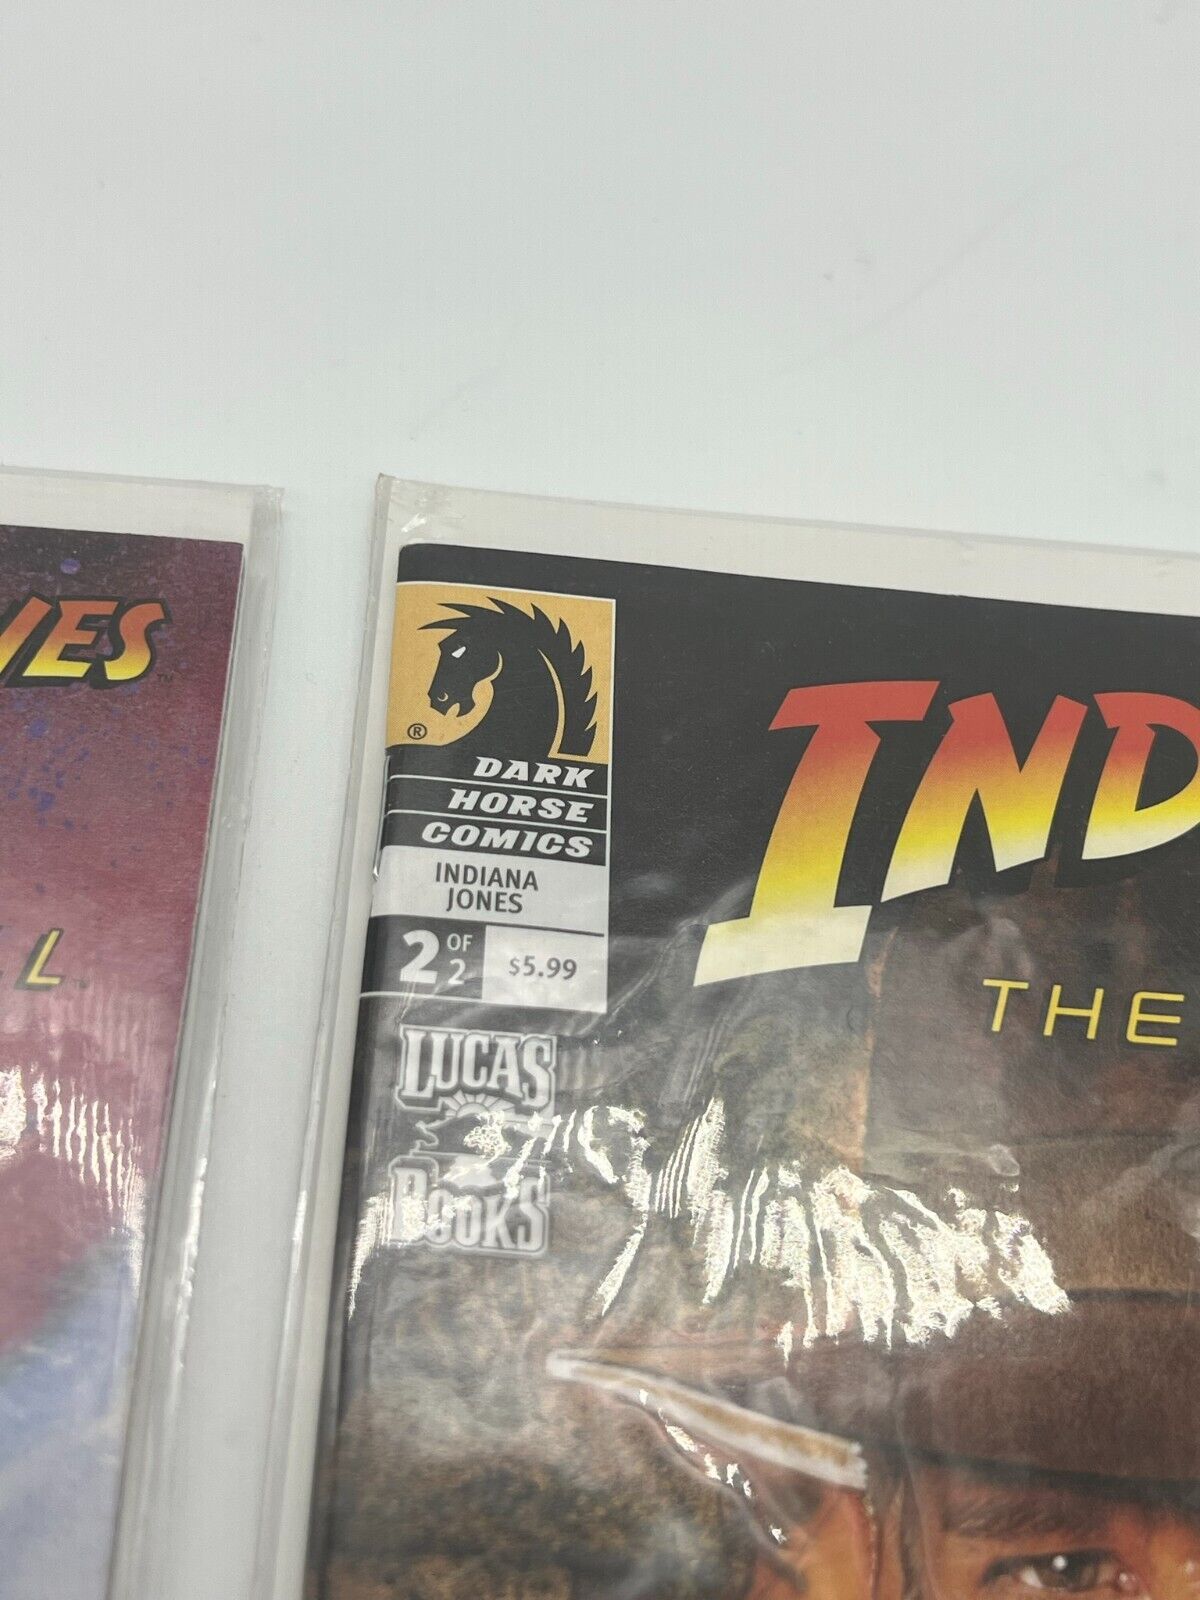 Indiana Jones and The Kingdom of The Crystal Skull - Dark Horse Comics